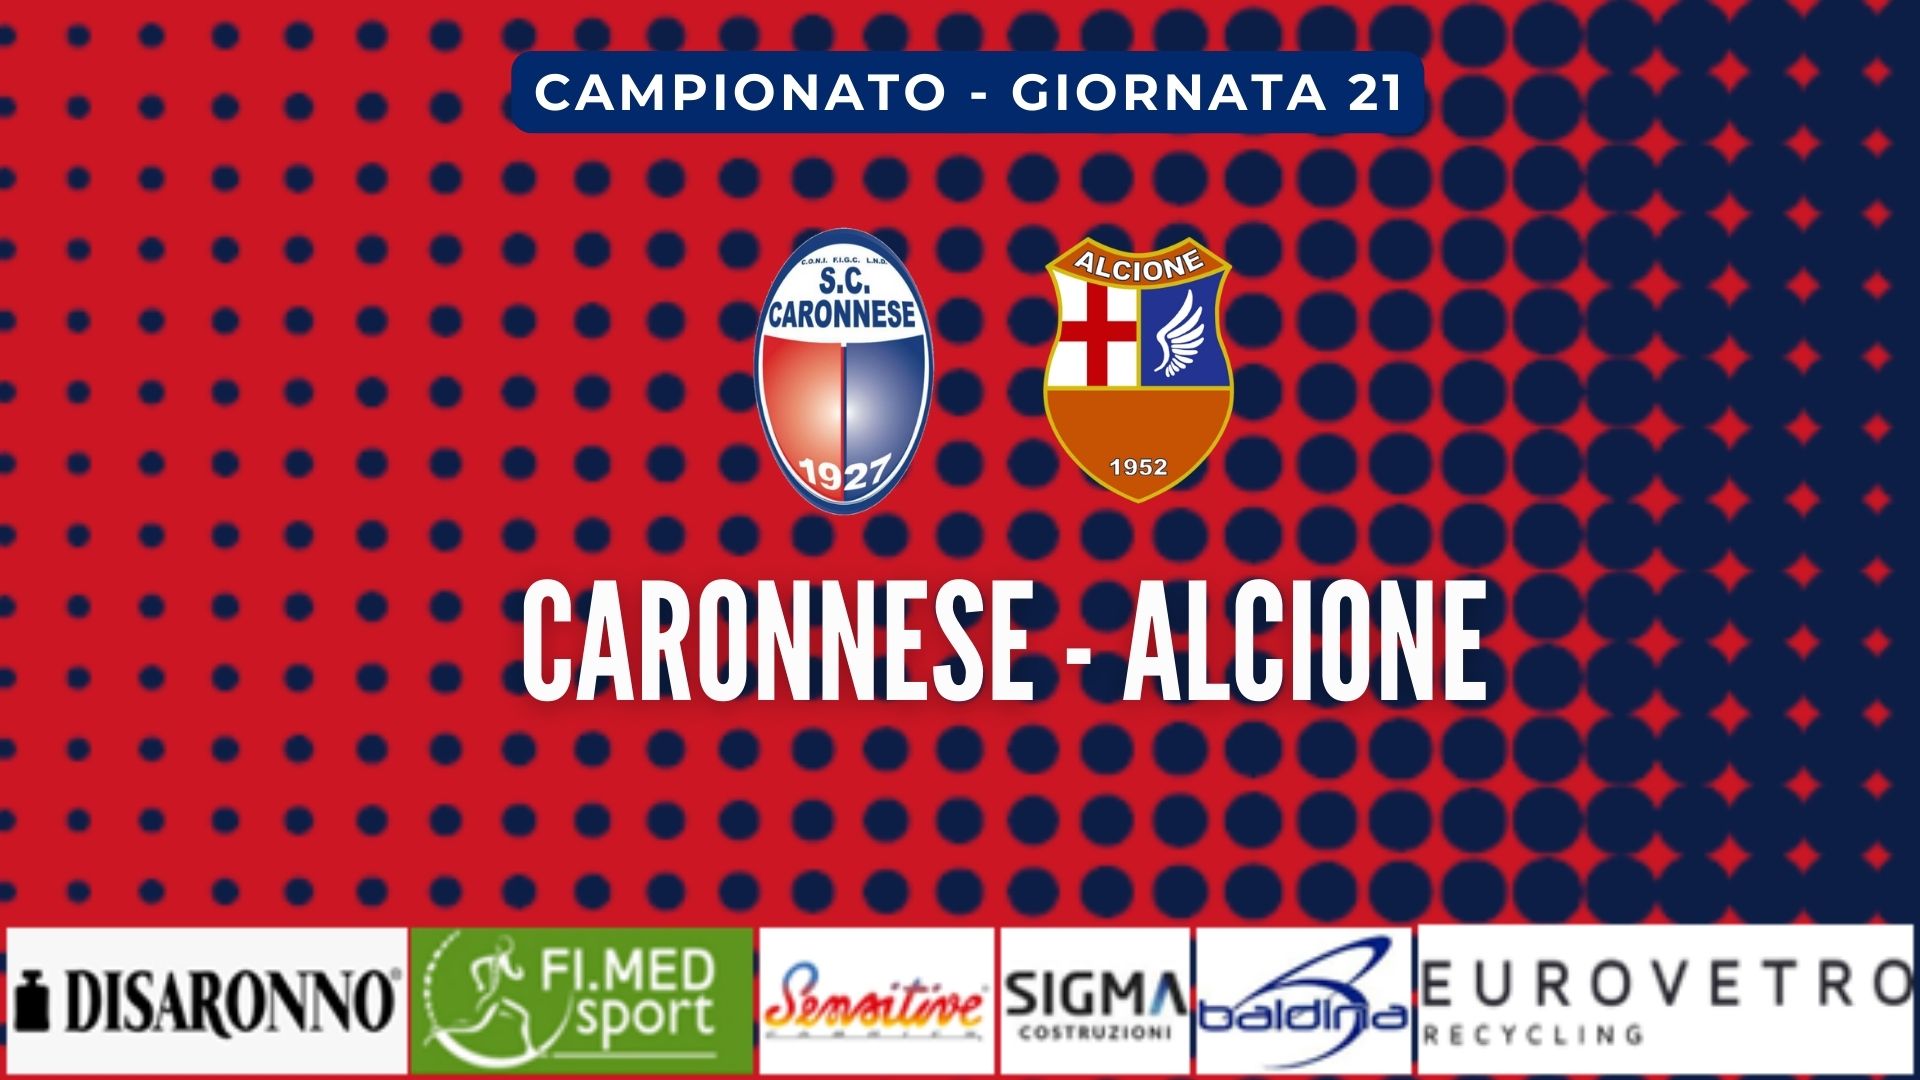 Caronnese-Alcione: Gli Highlights